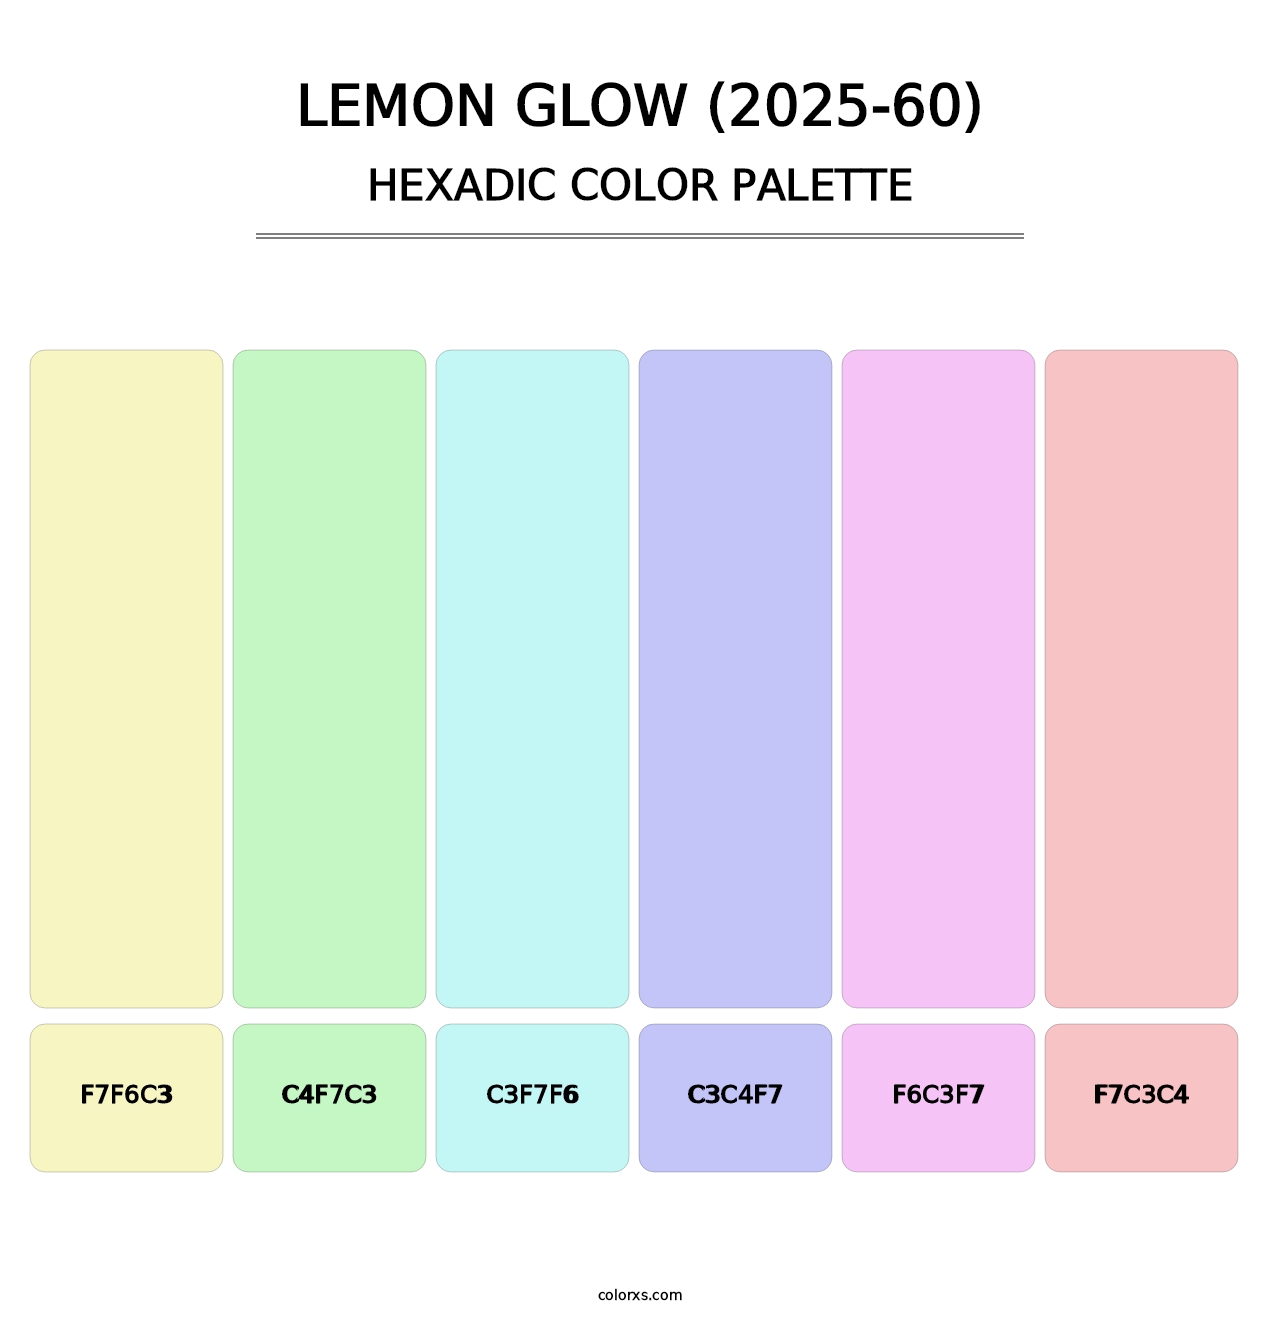 Lemon Glow (2025-60) - Hexadic Color Palette